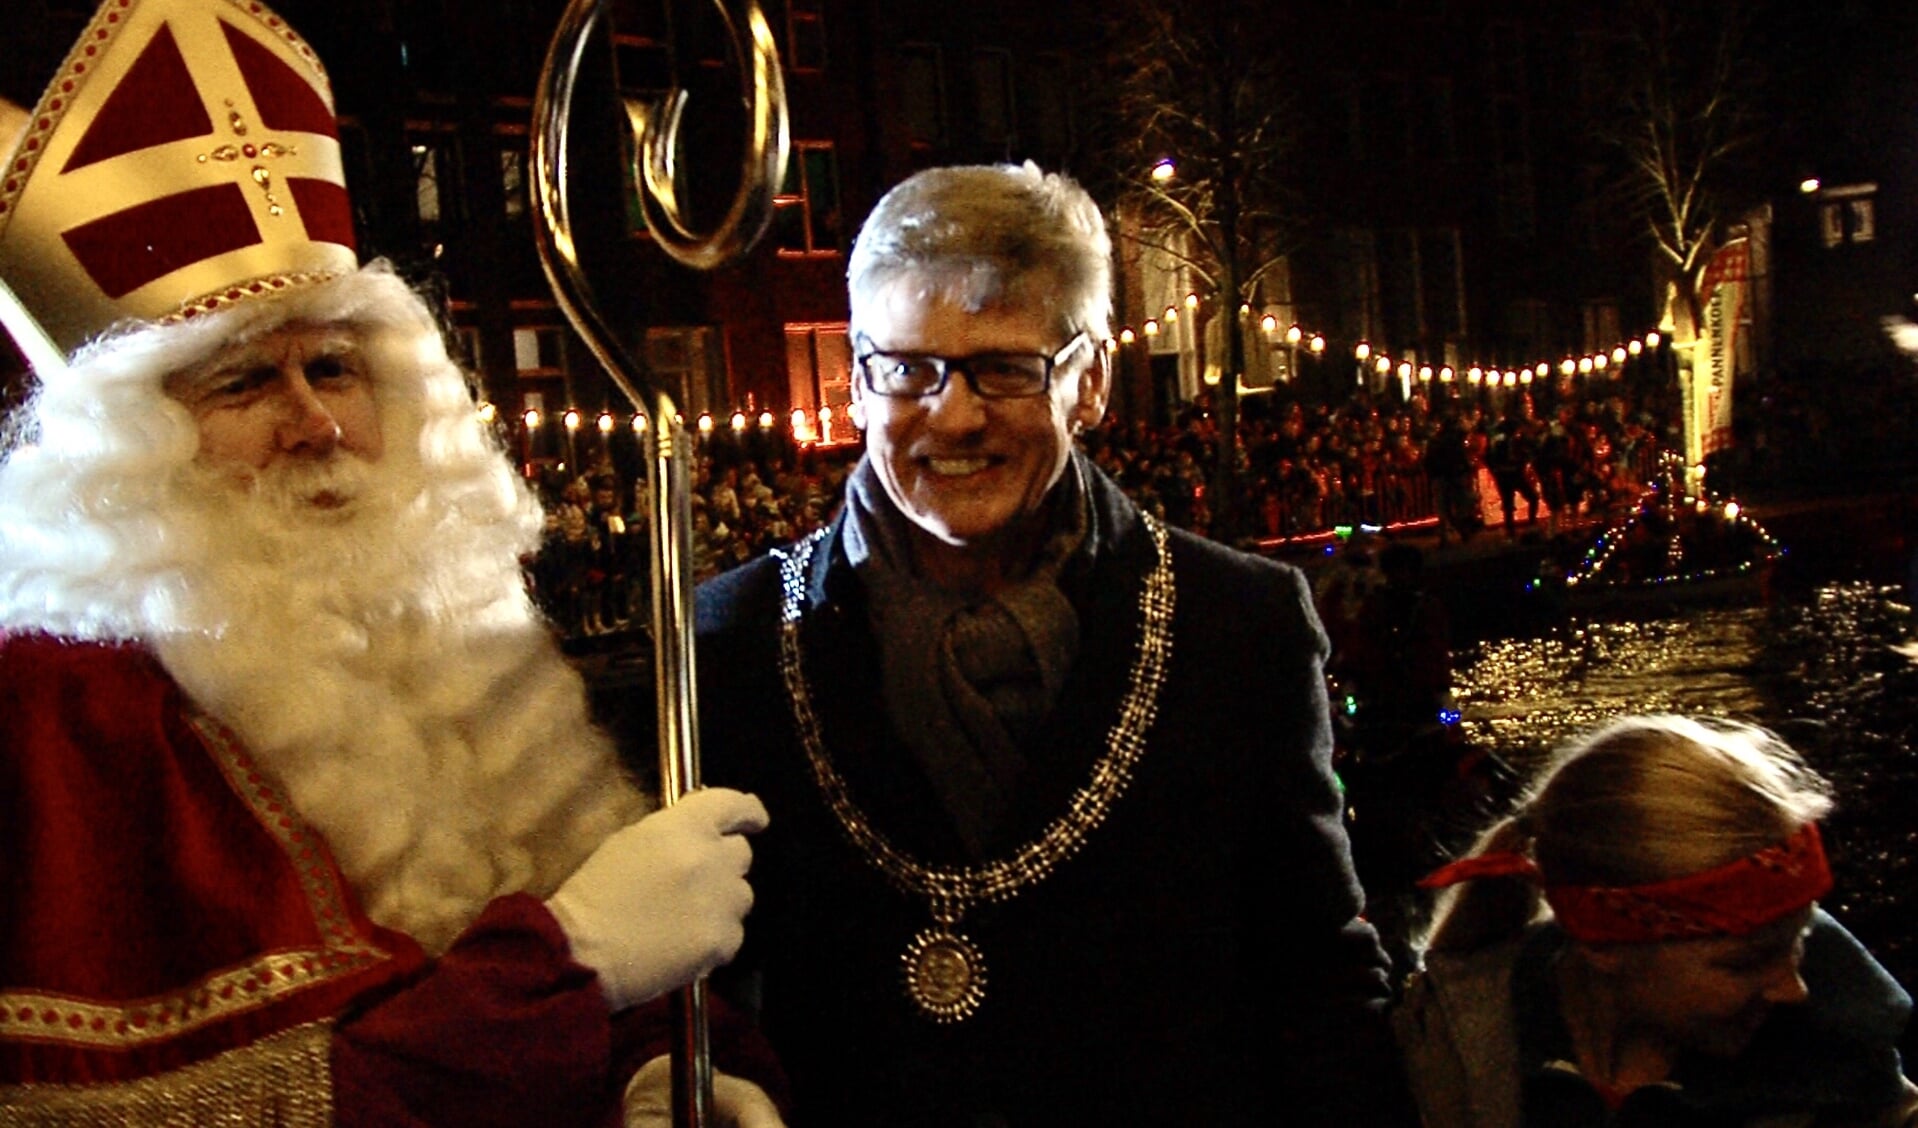 Sinterklaasintocht in Vathorst in 2019.